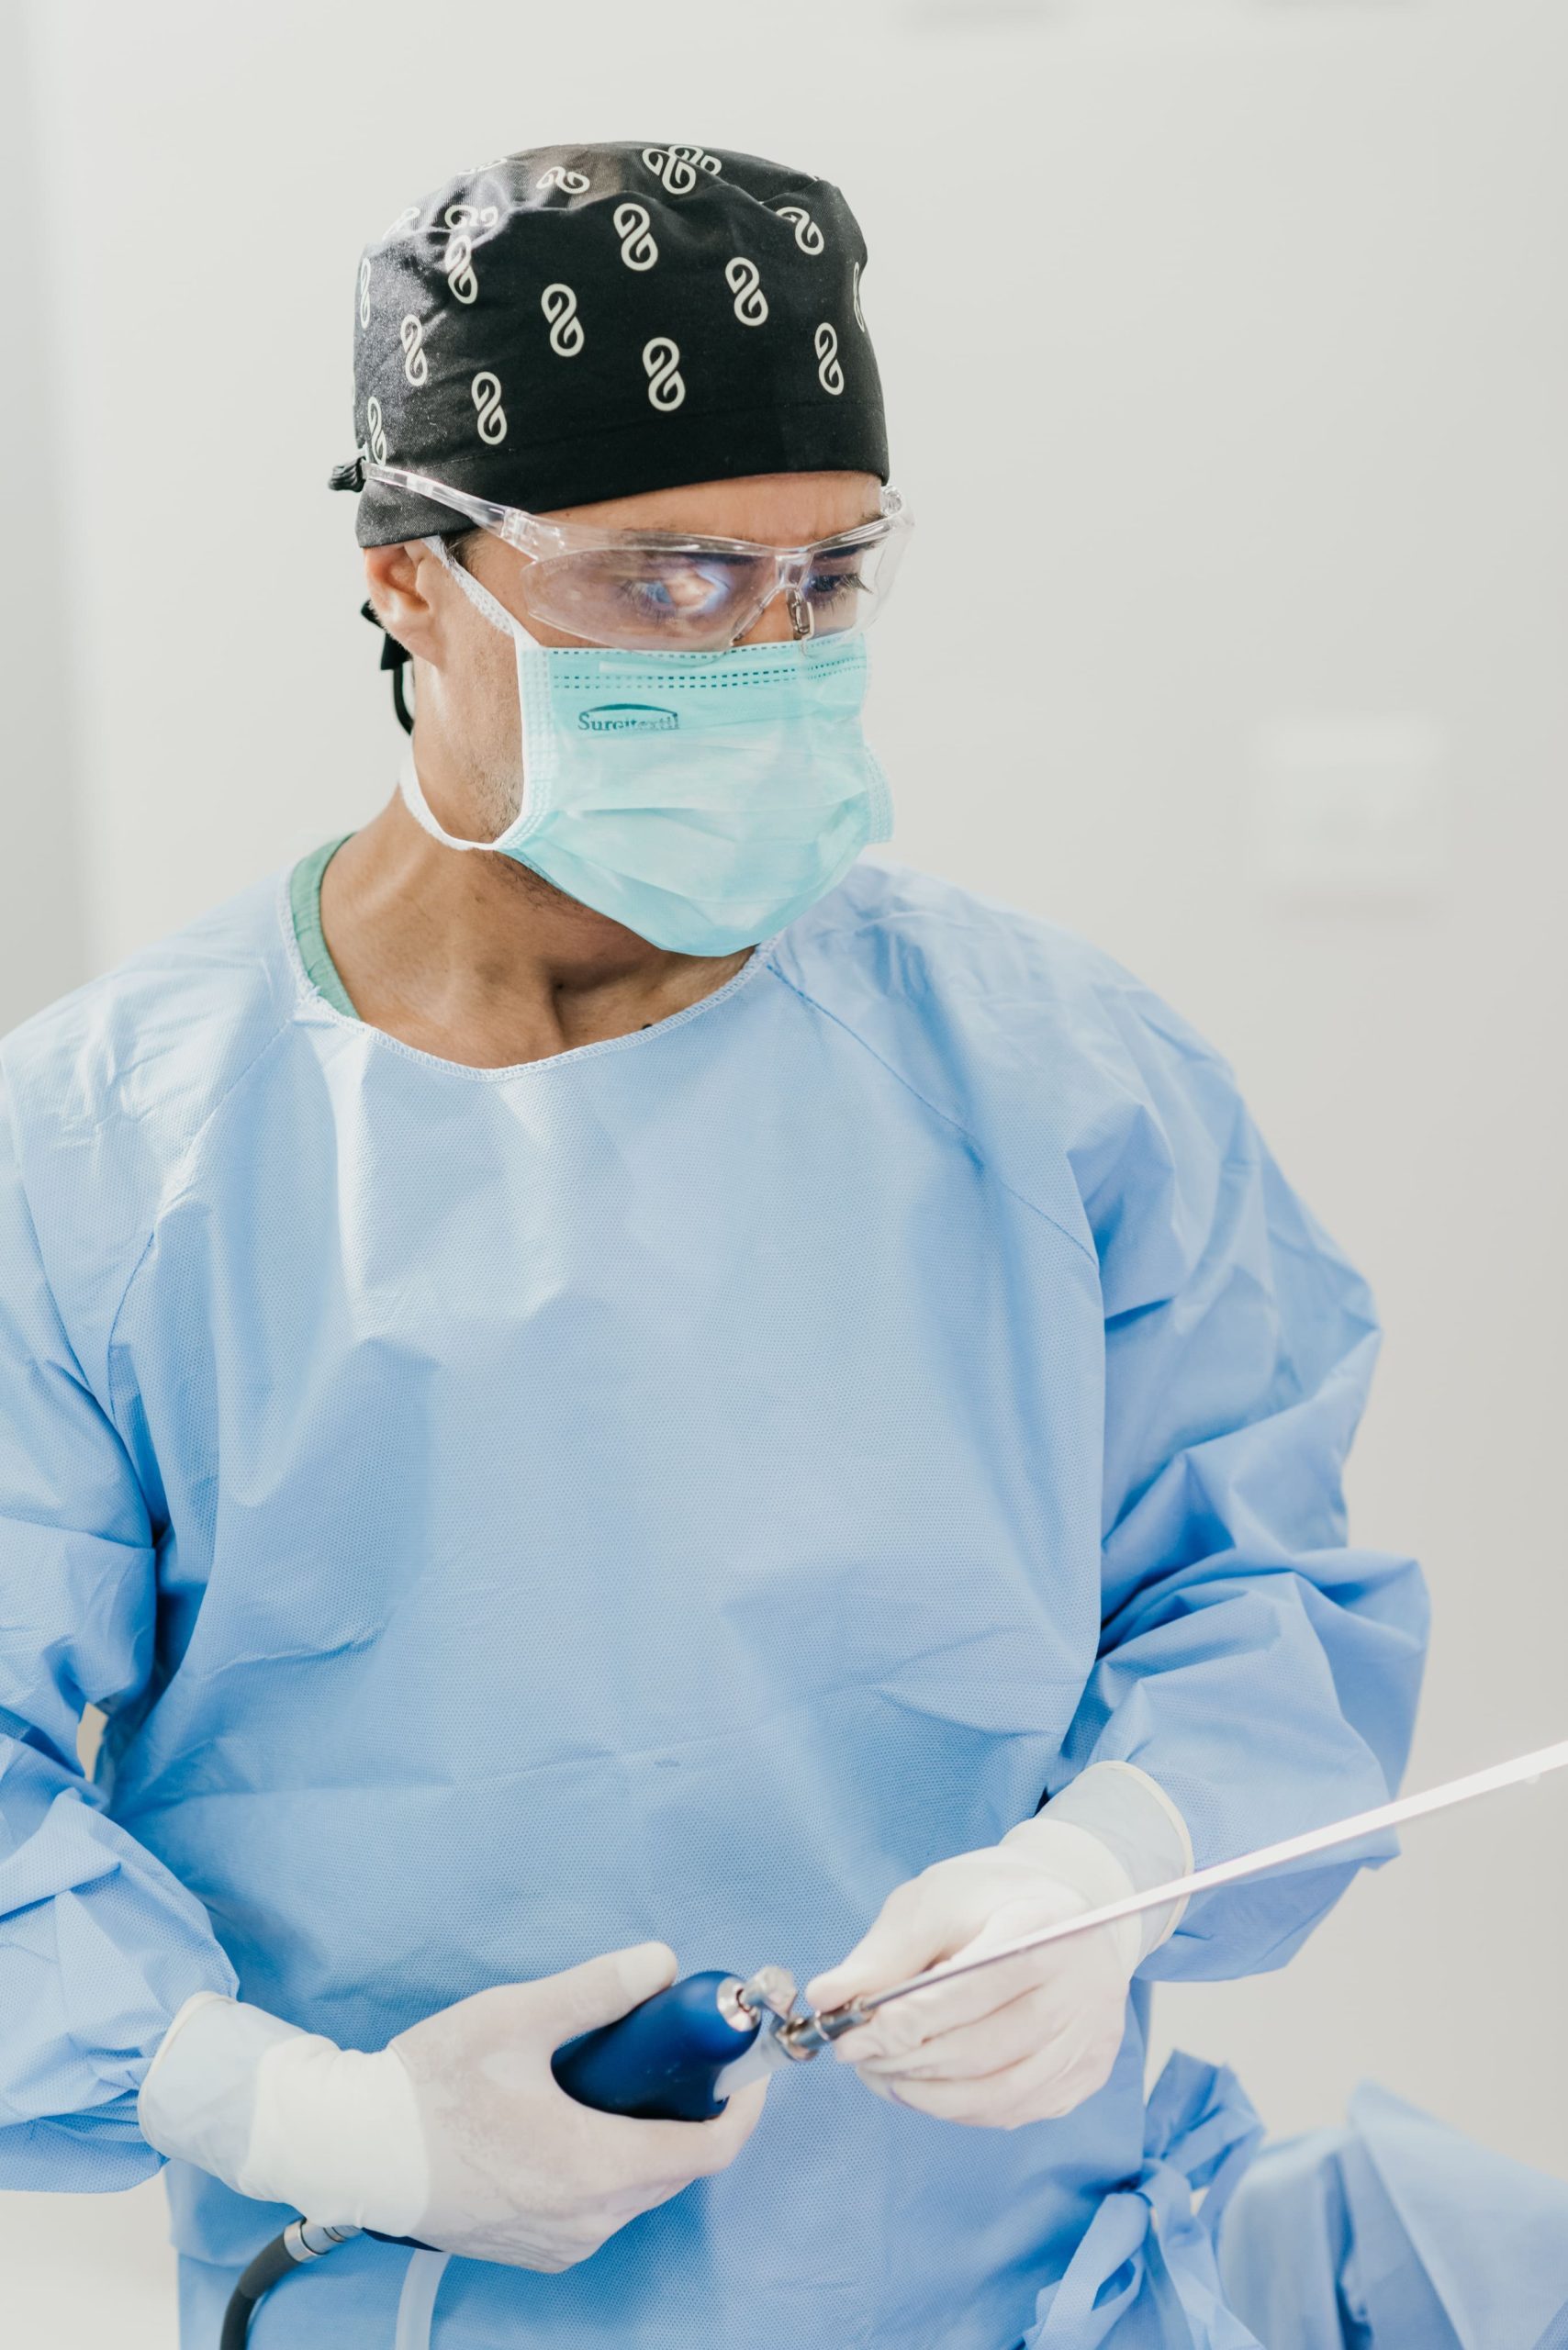 Cirurgia Umbilical – Dr. Renar